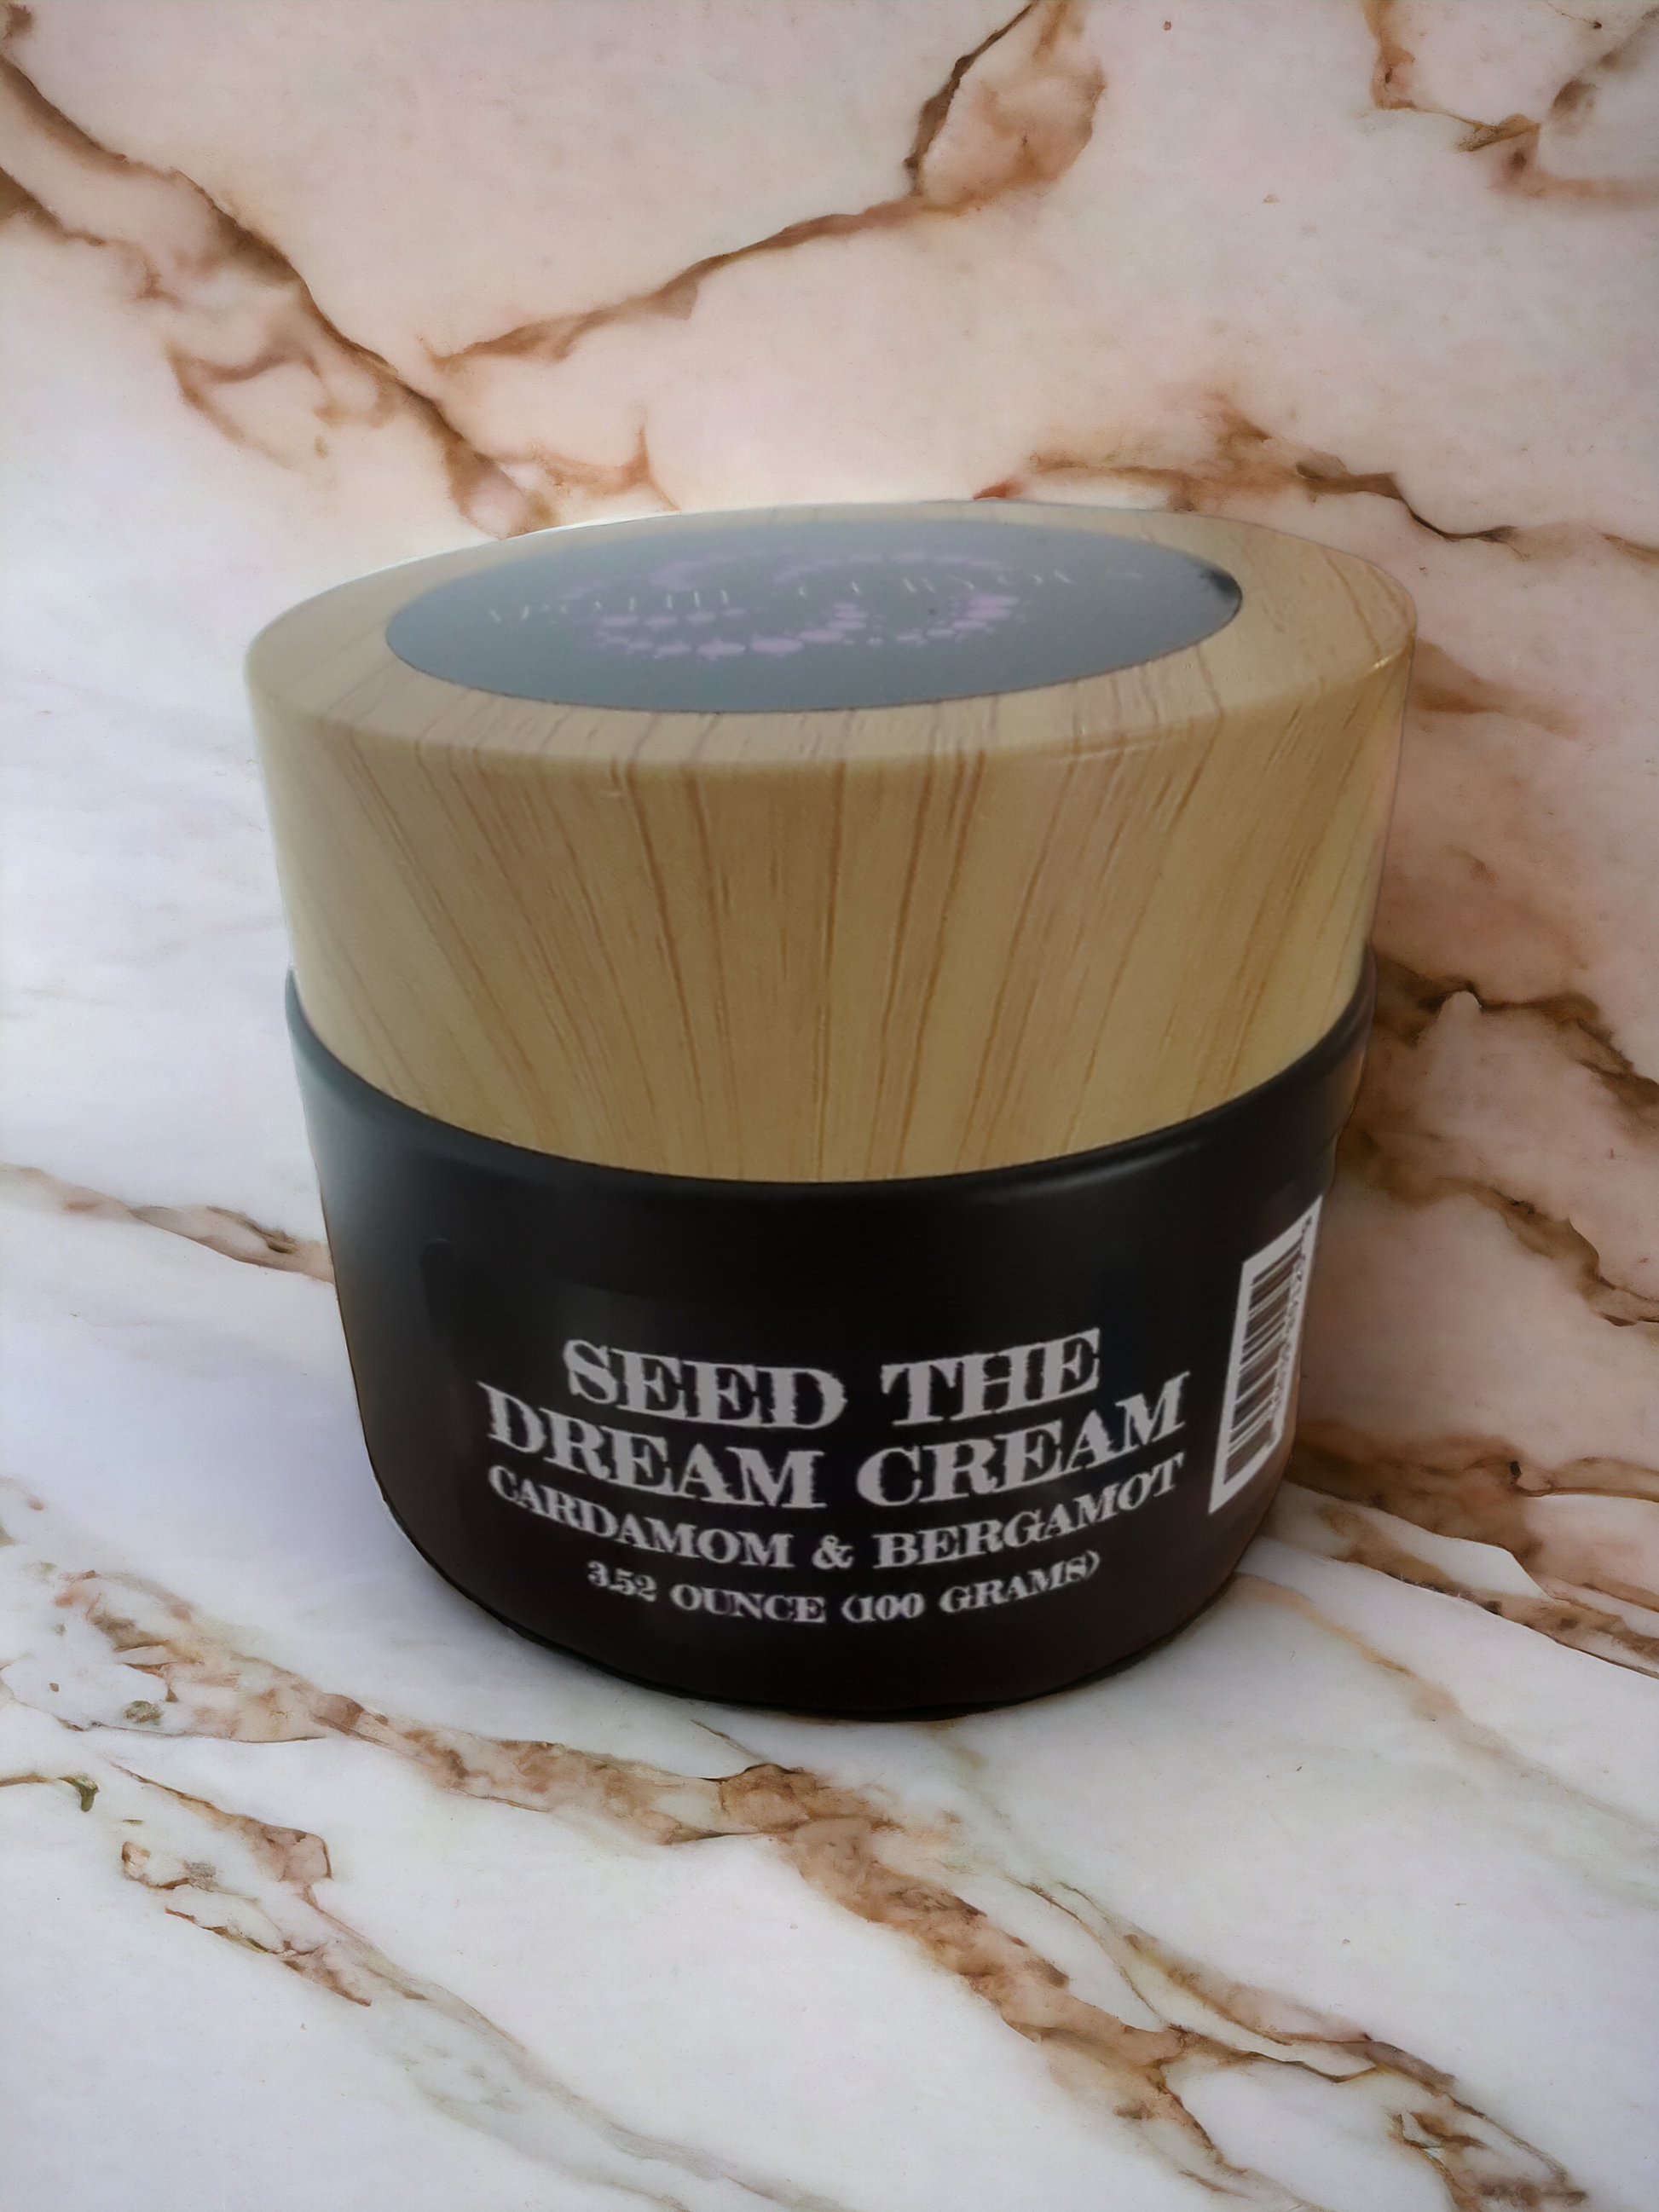 Seed the Dream cream, Cardamom & Bergamot, 100 grams, Apothecuryous